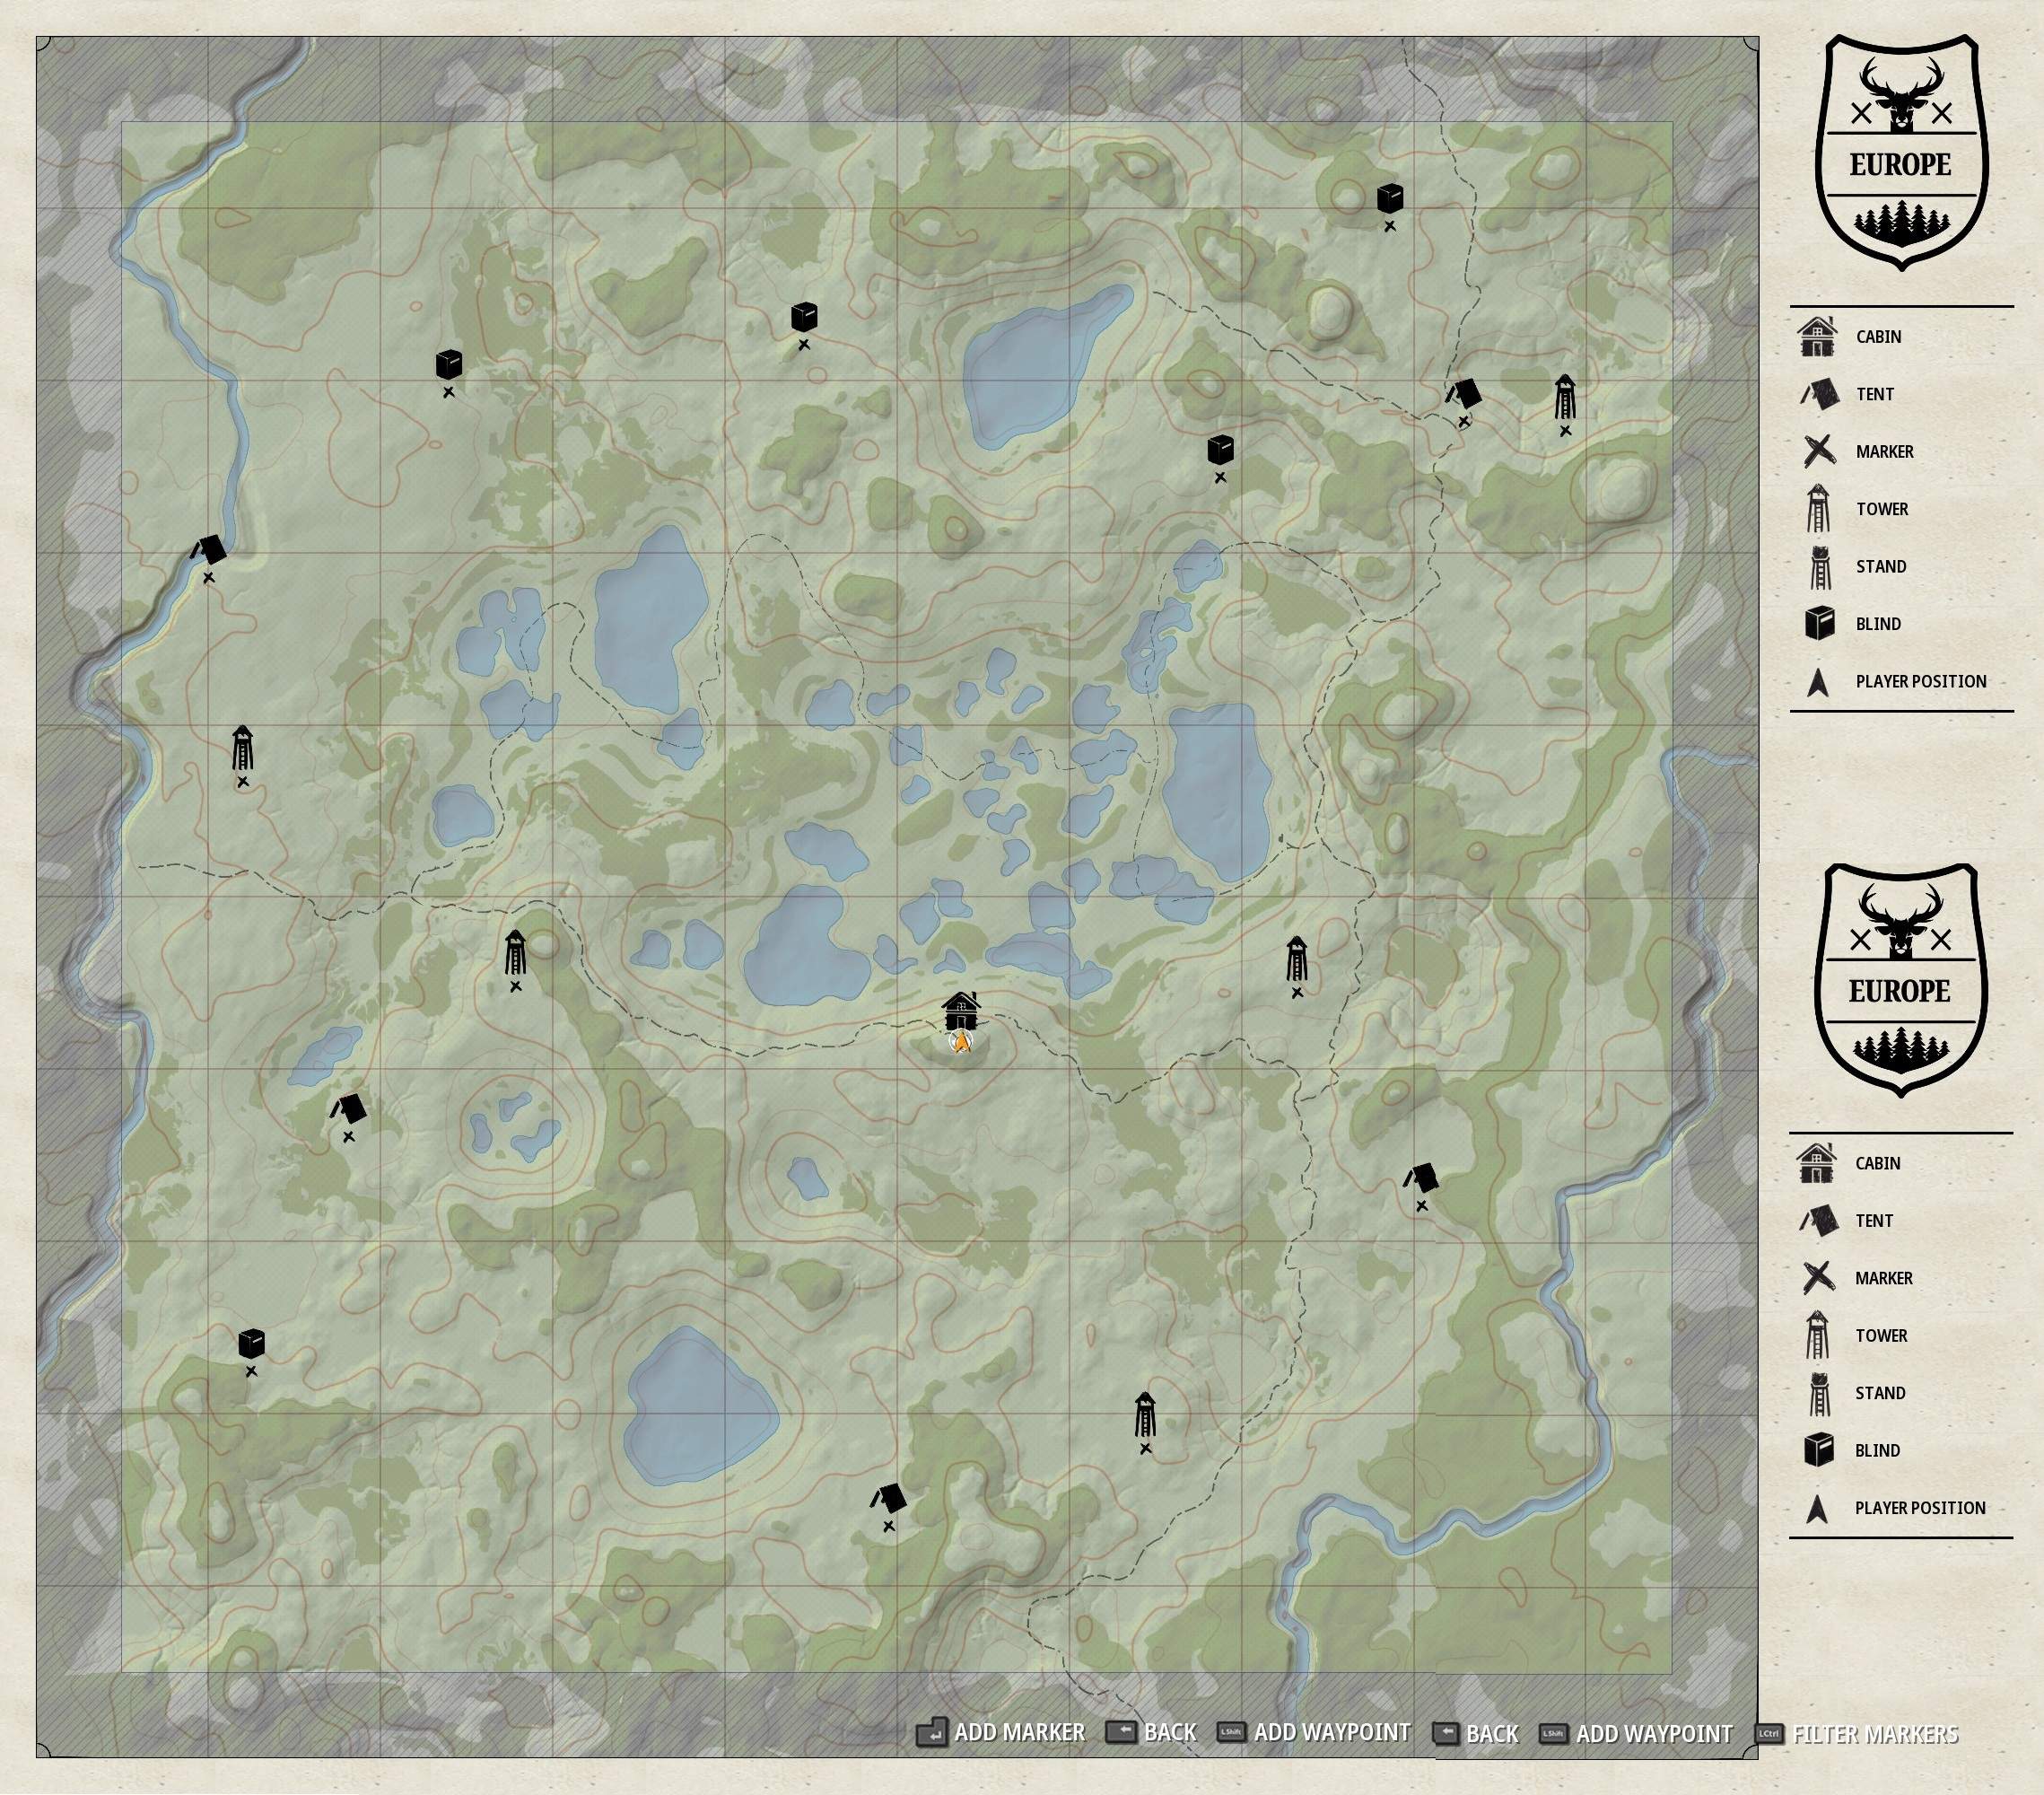 hunting simulator 2 maps